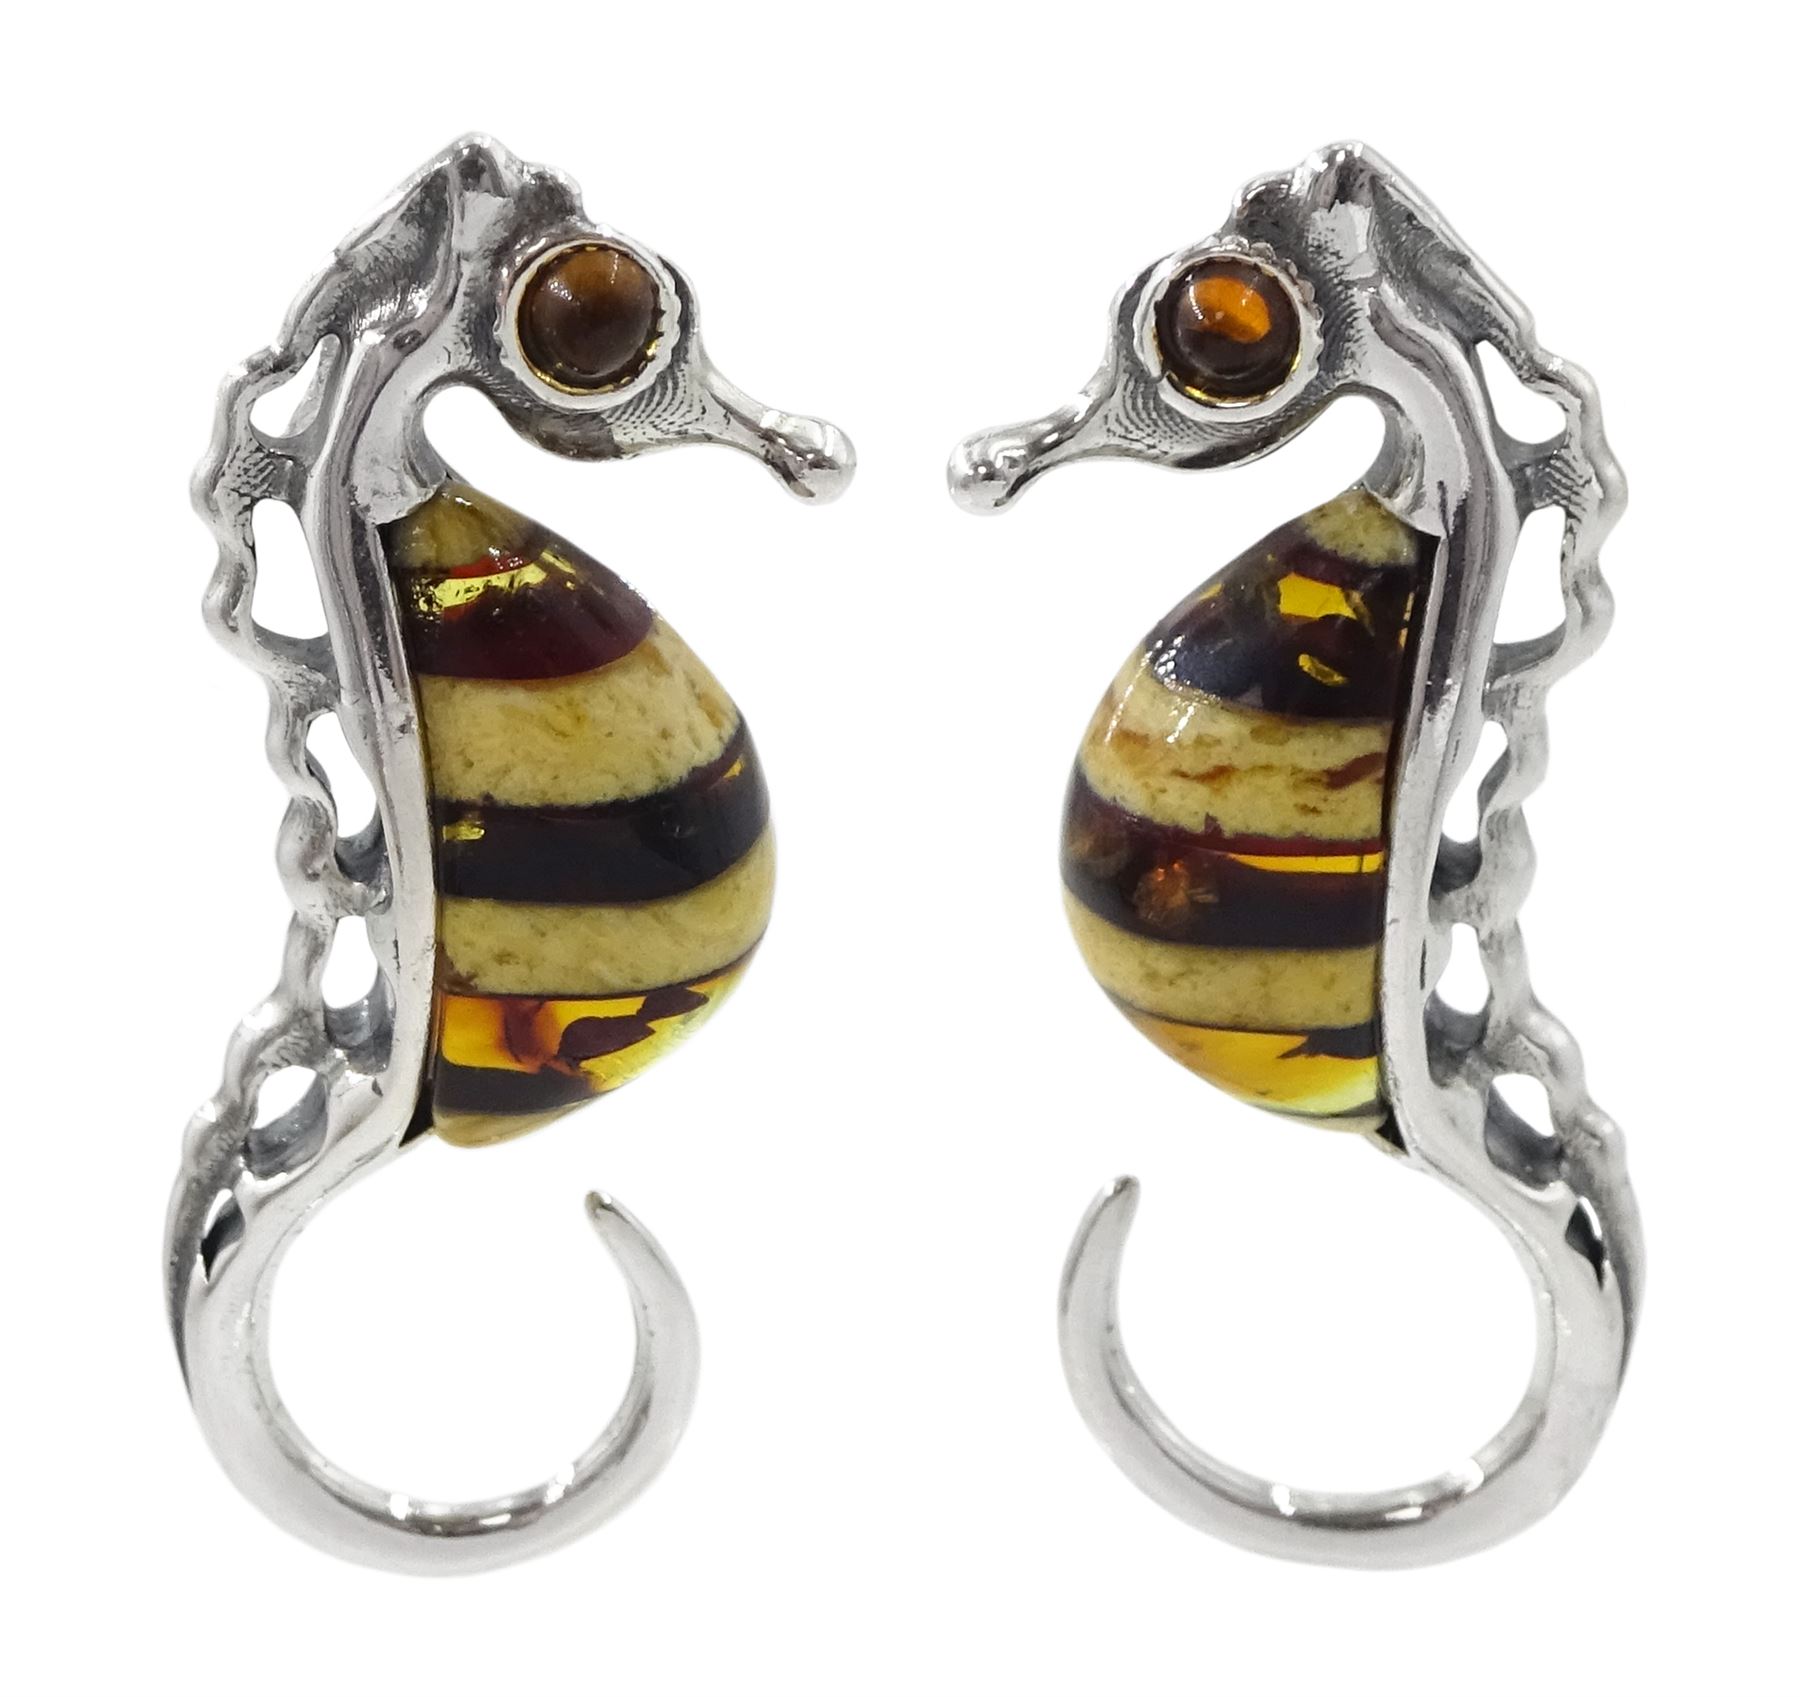 Pair of silver Baltic amber seahorse stud earrings